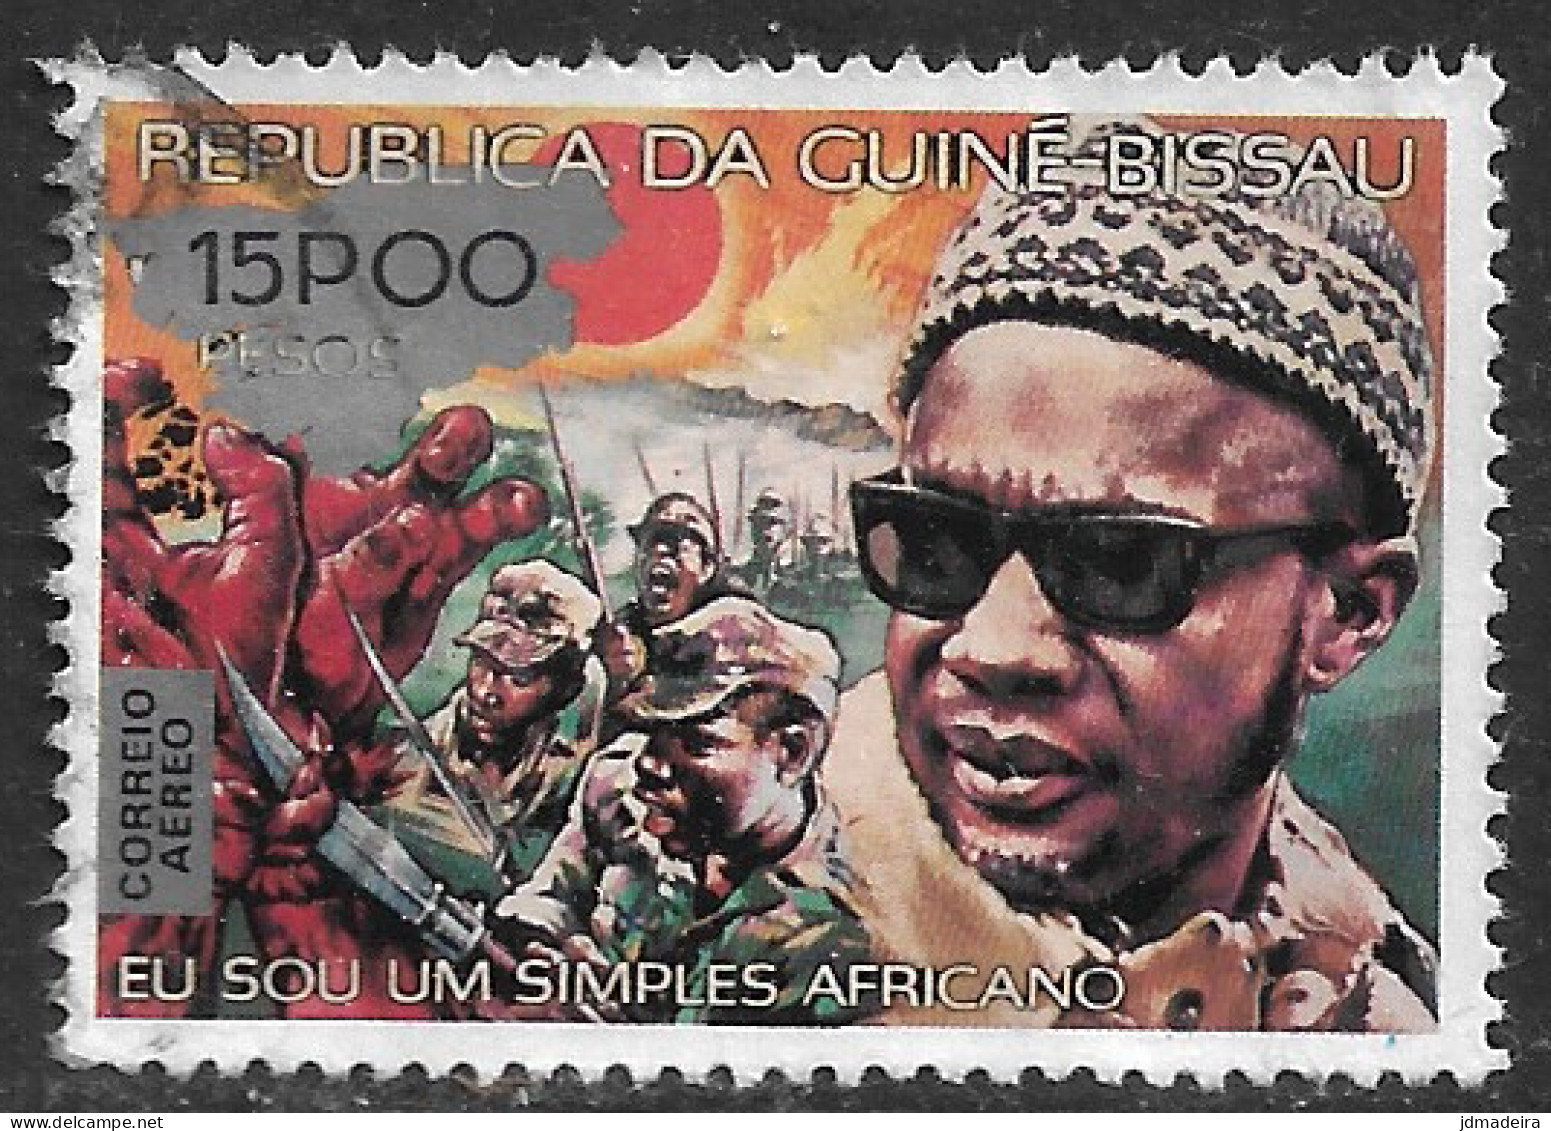 GUINE BISSAU – 1977 Amílcar Cabral Surcharged 15P00 Over 0P50 Used Stamp - Guinea-Bissau